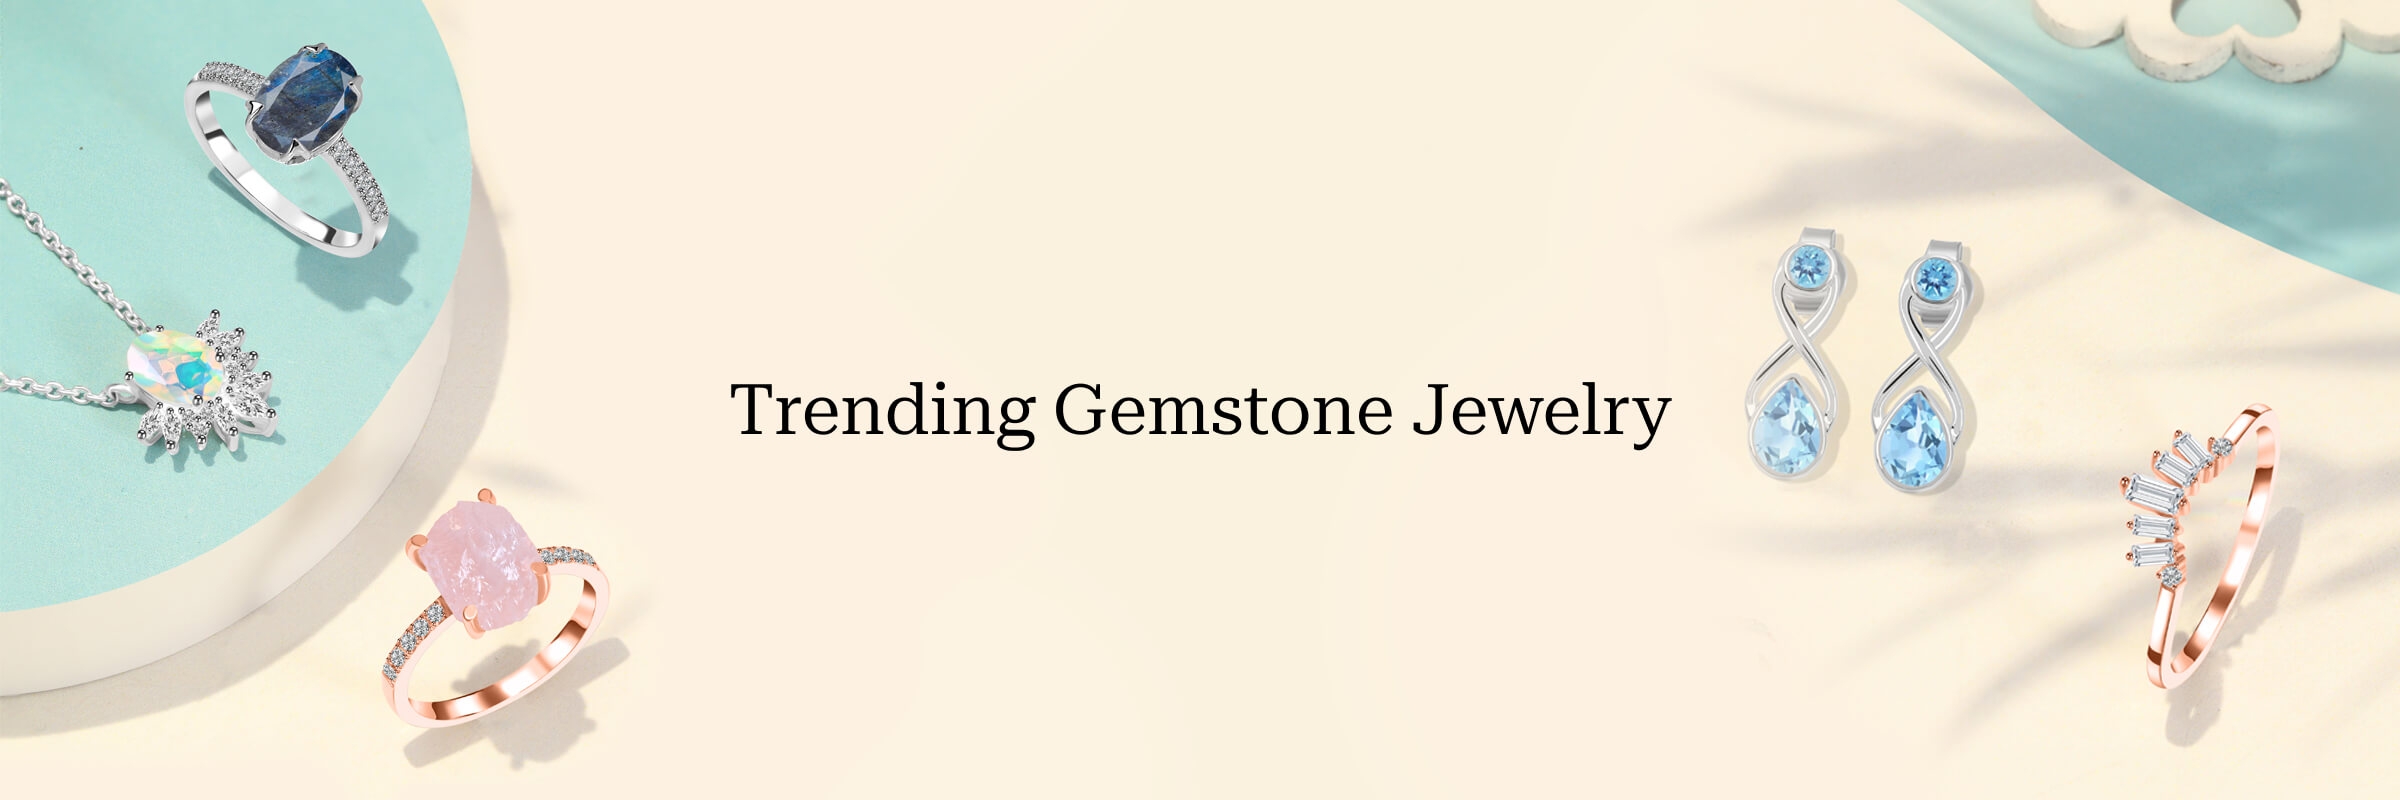 The trending silver gemstone jewelry